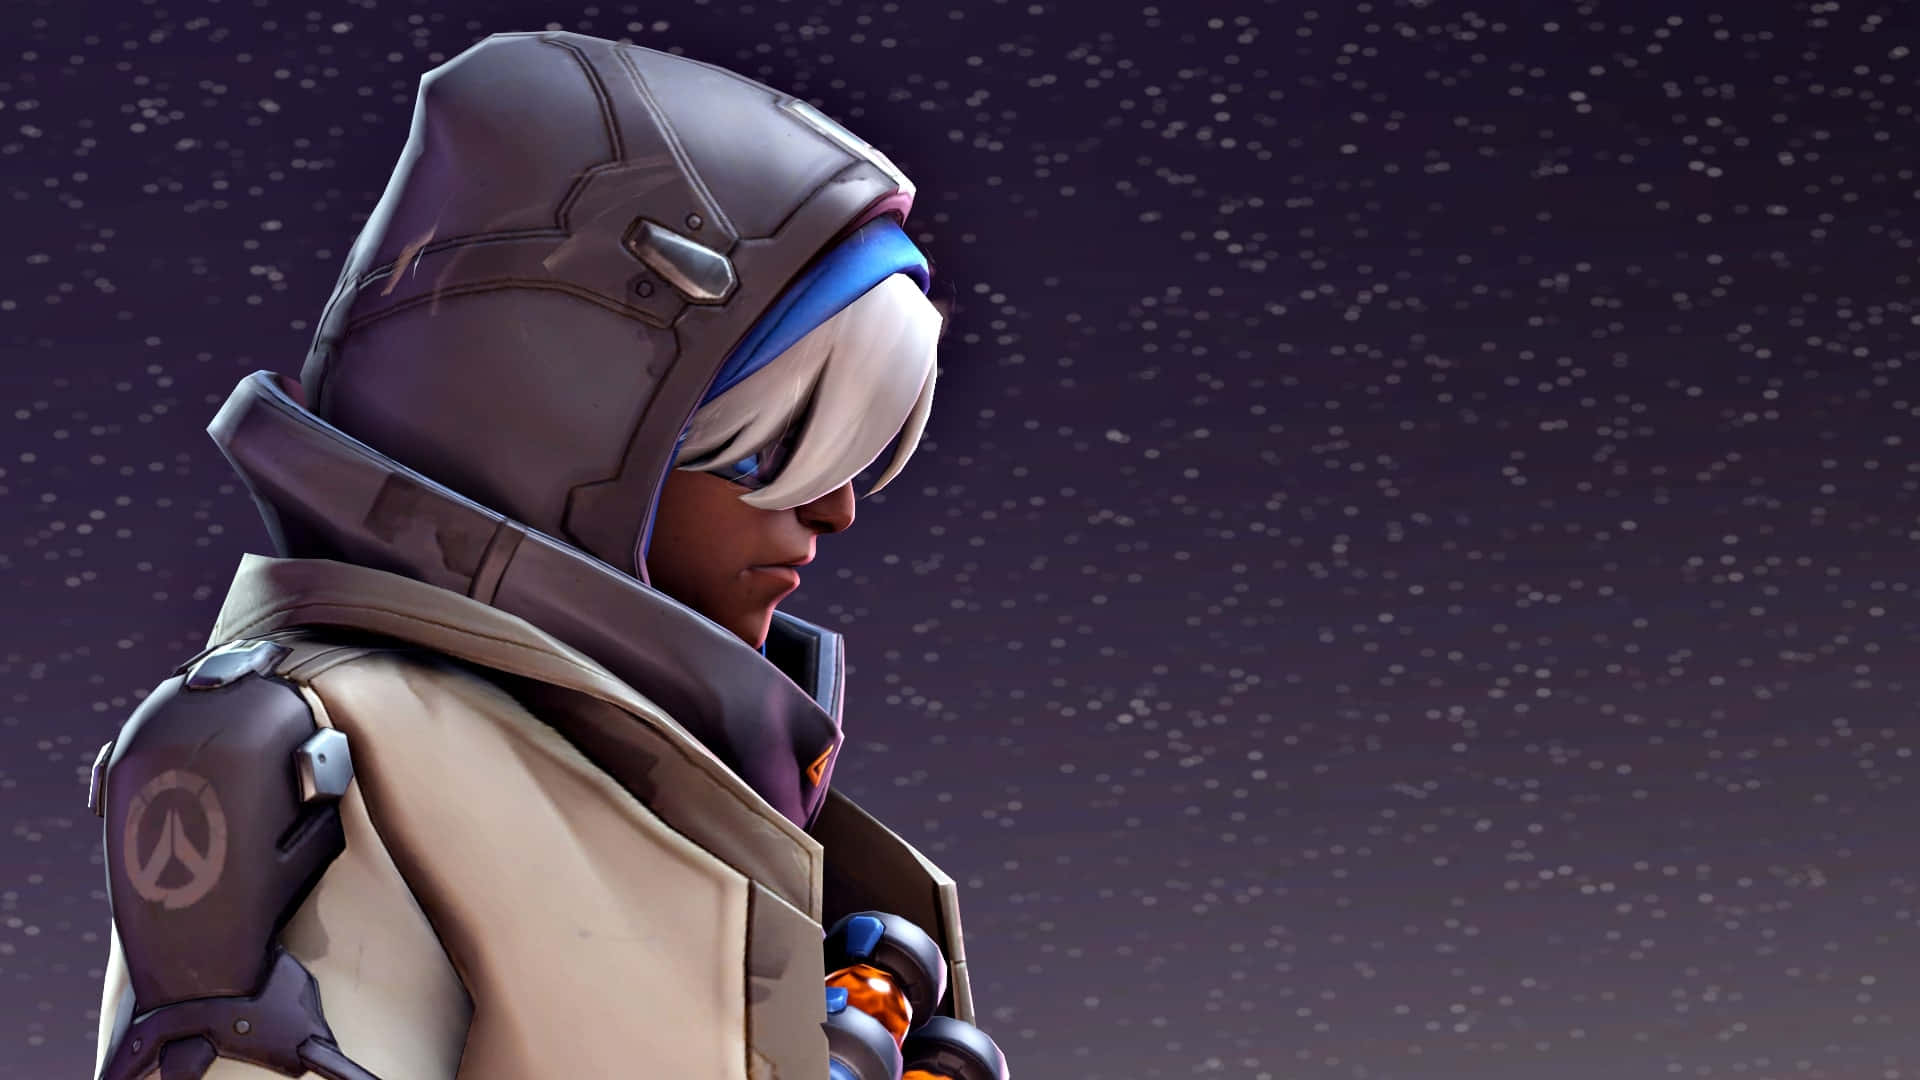 Ana, the sharpshooting support hero in Overwatch. Wallpaper